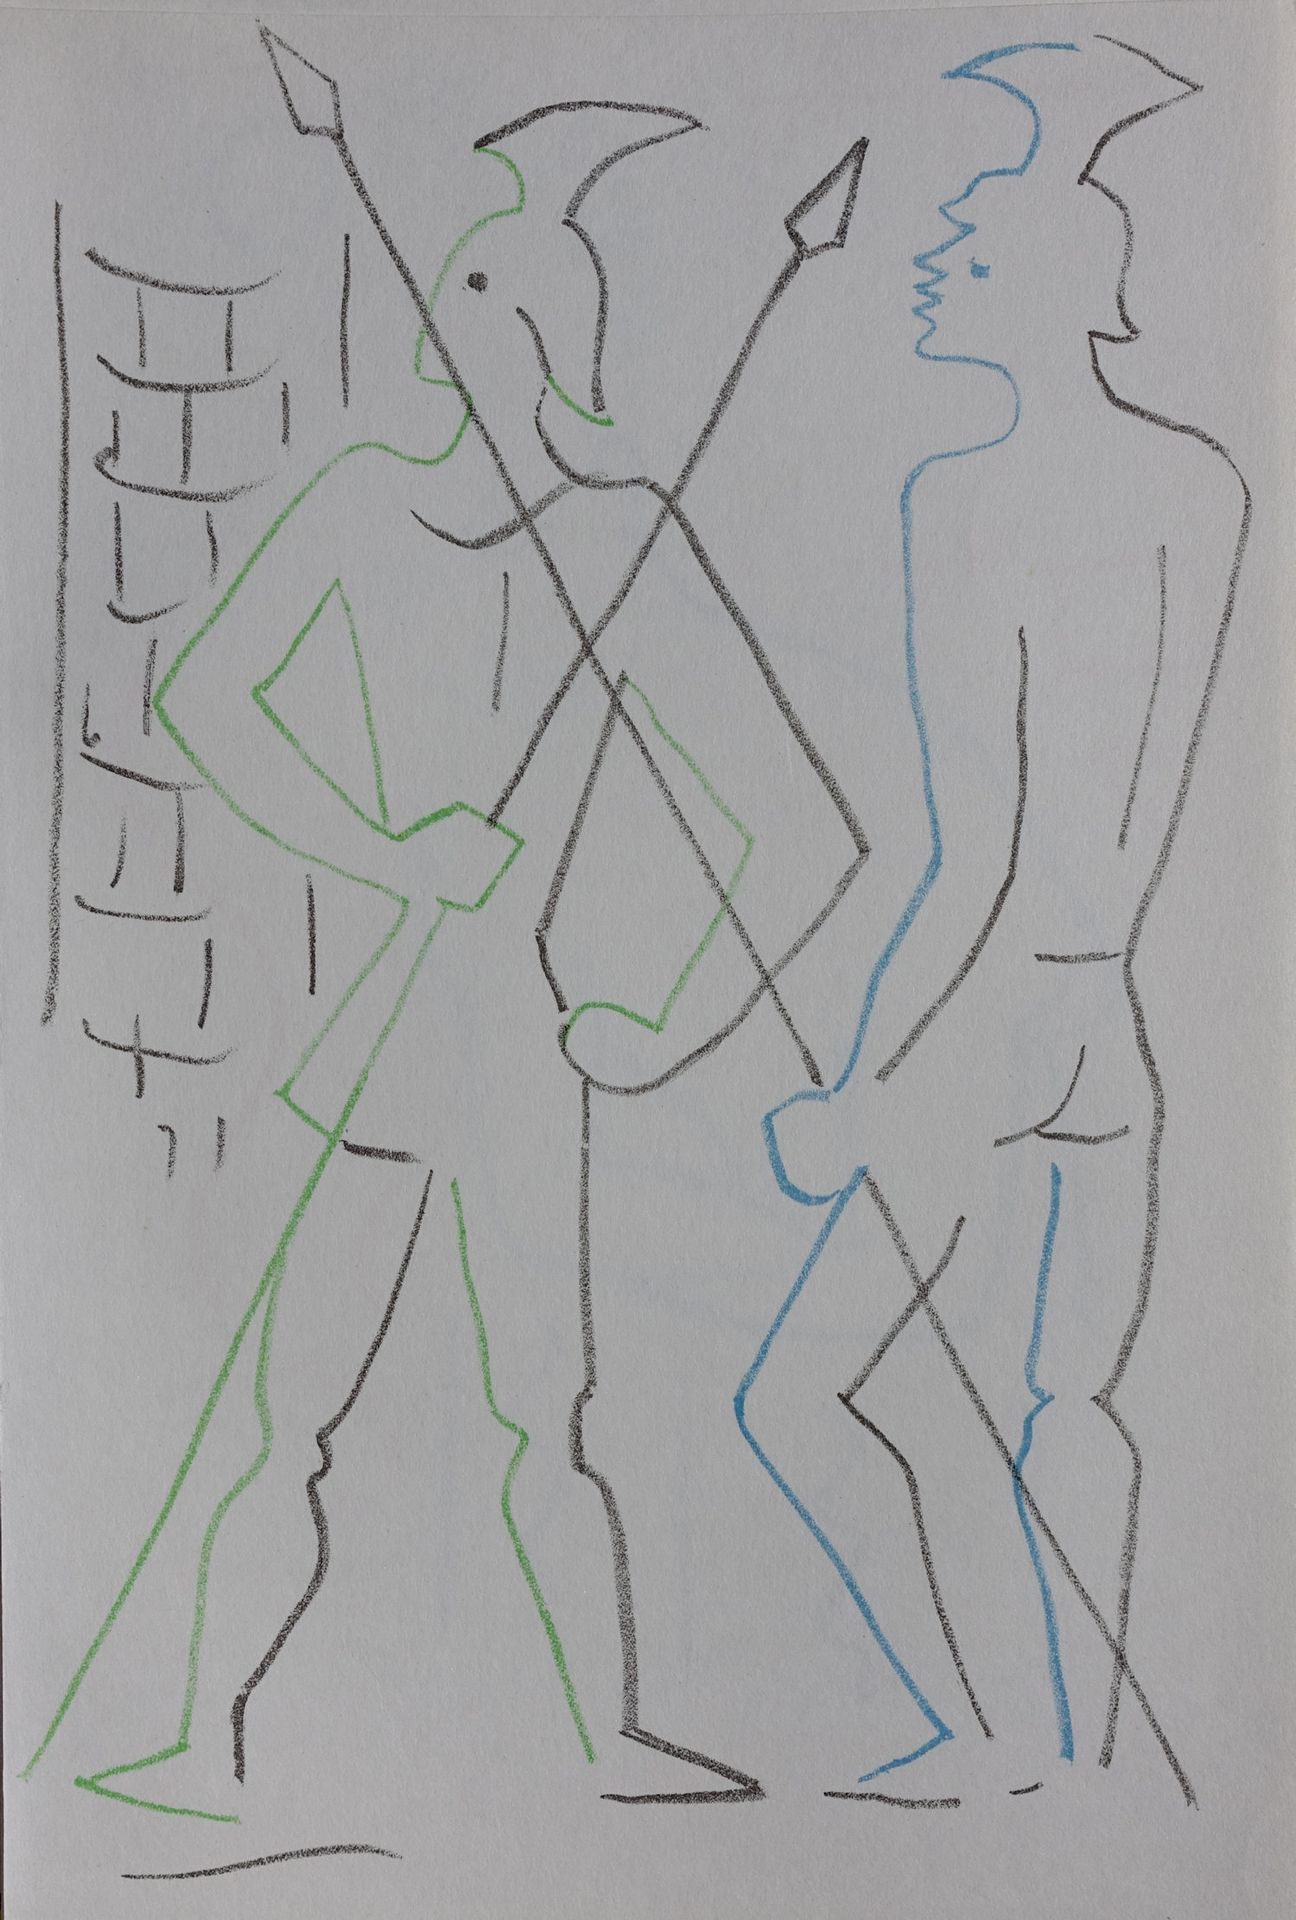 JEAN COCTEAU 让-科克托（Jean COCTEAU） (1889-1963)

两名卫兵

原始石版画

无符号

总尺寸：22 x 14,5厘米左&hellip;